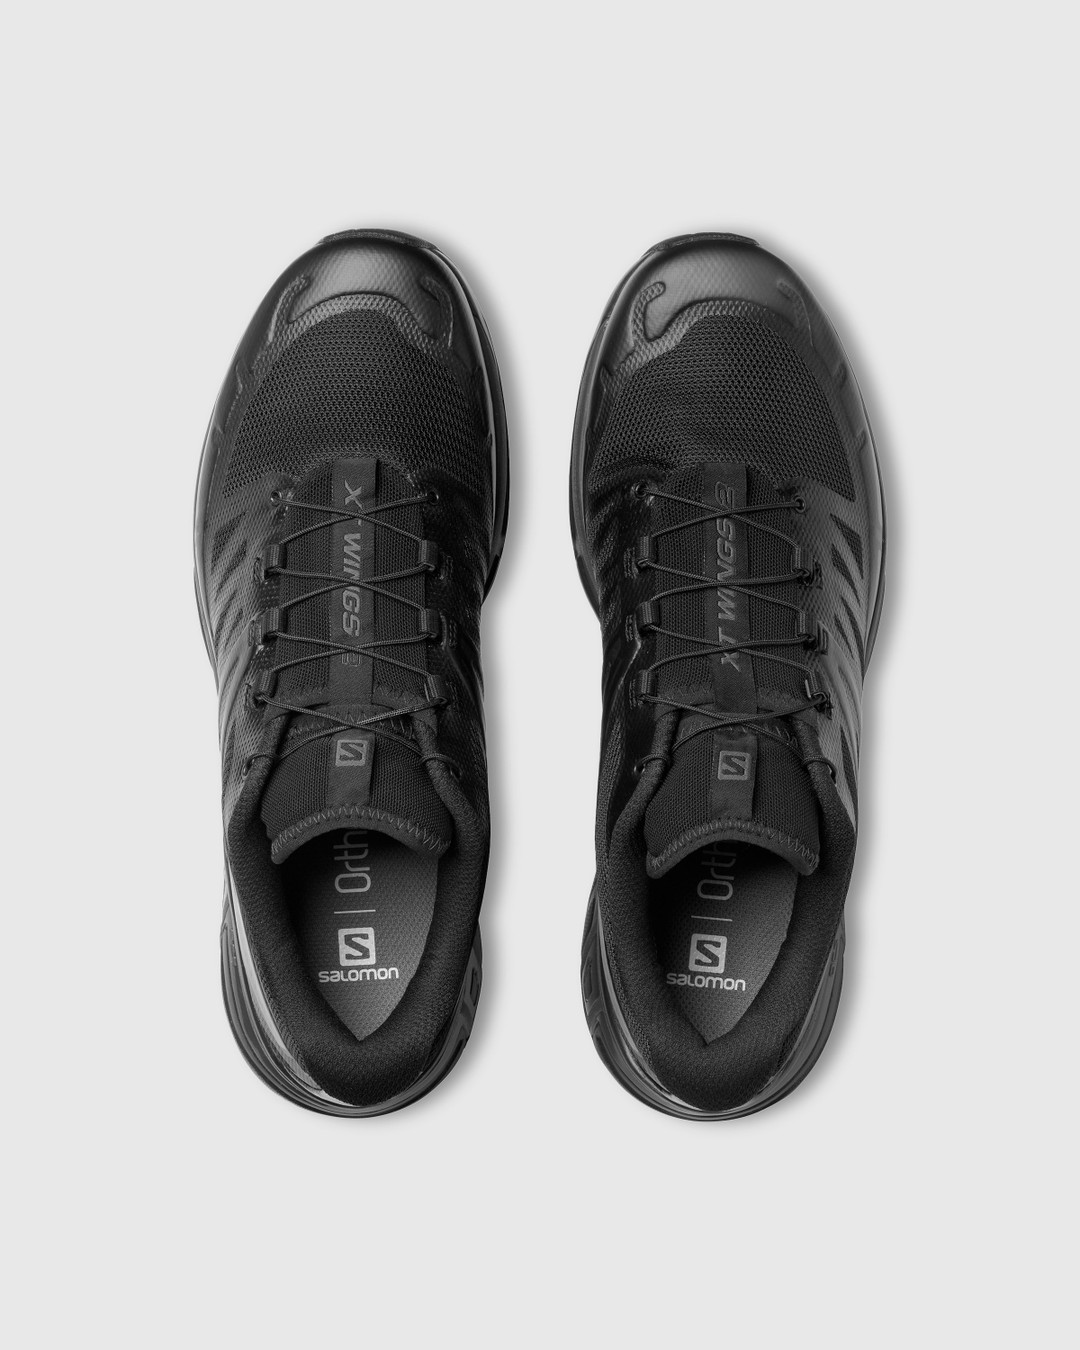 Salomon – XT-Wings 2 Advanced Black/Black/Magnet - Low Top Sneakers - Black - Image 3